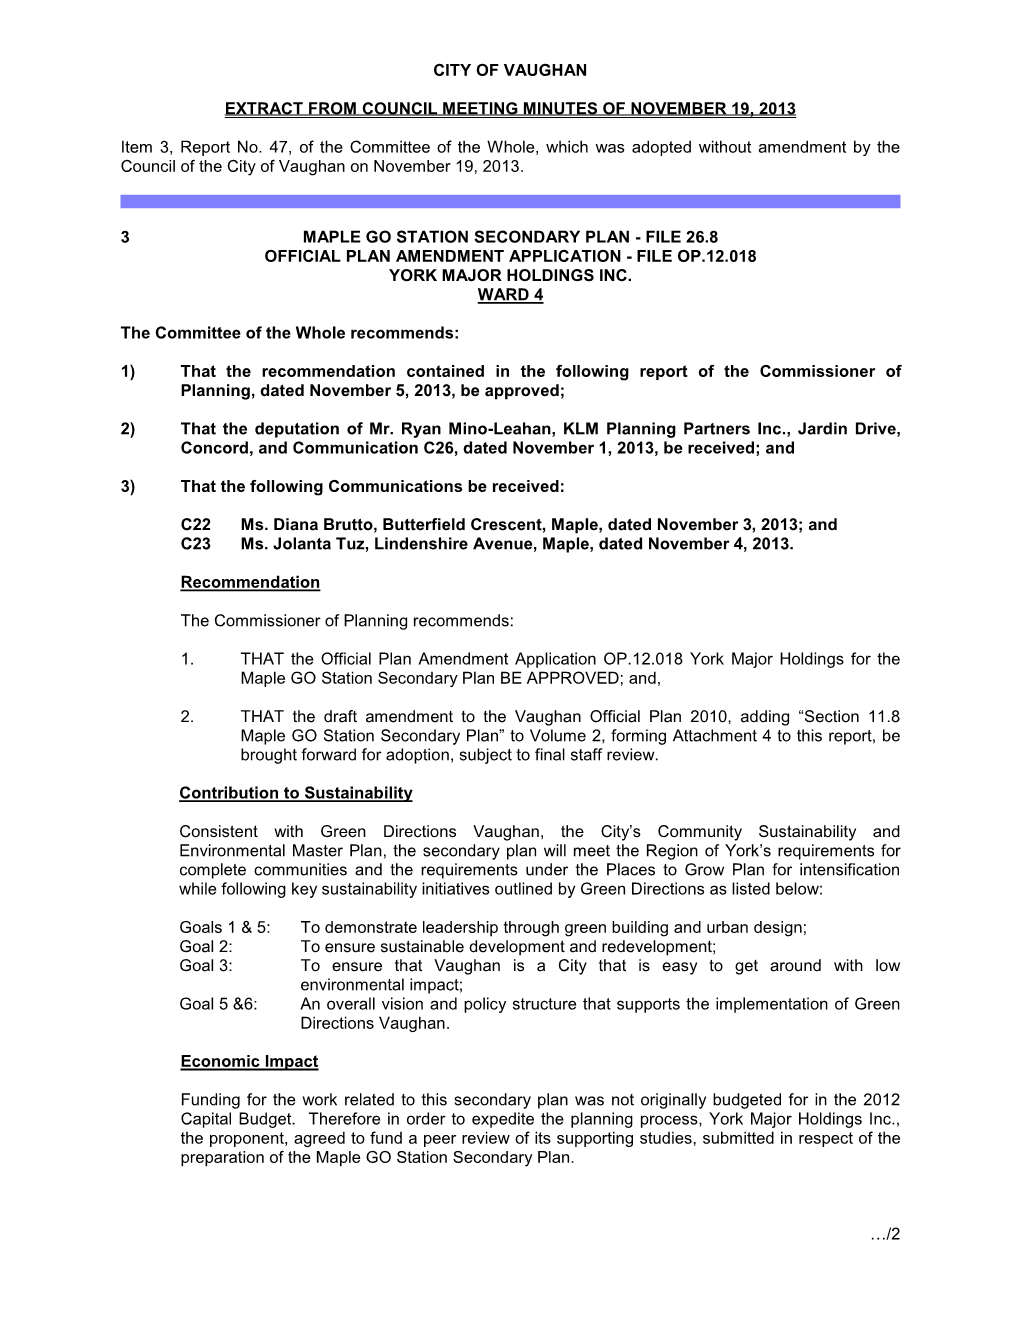 Maple Go Station Secondary Plan - File 26.8 Official Plan Amendment Application - File Op.12.018 York Major Holdings Inc